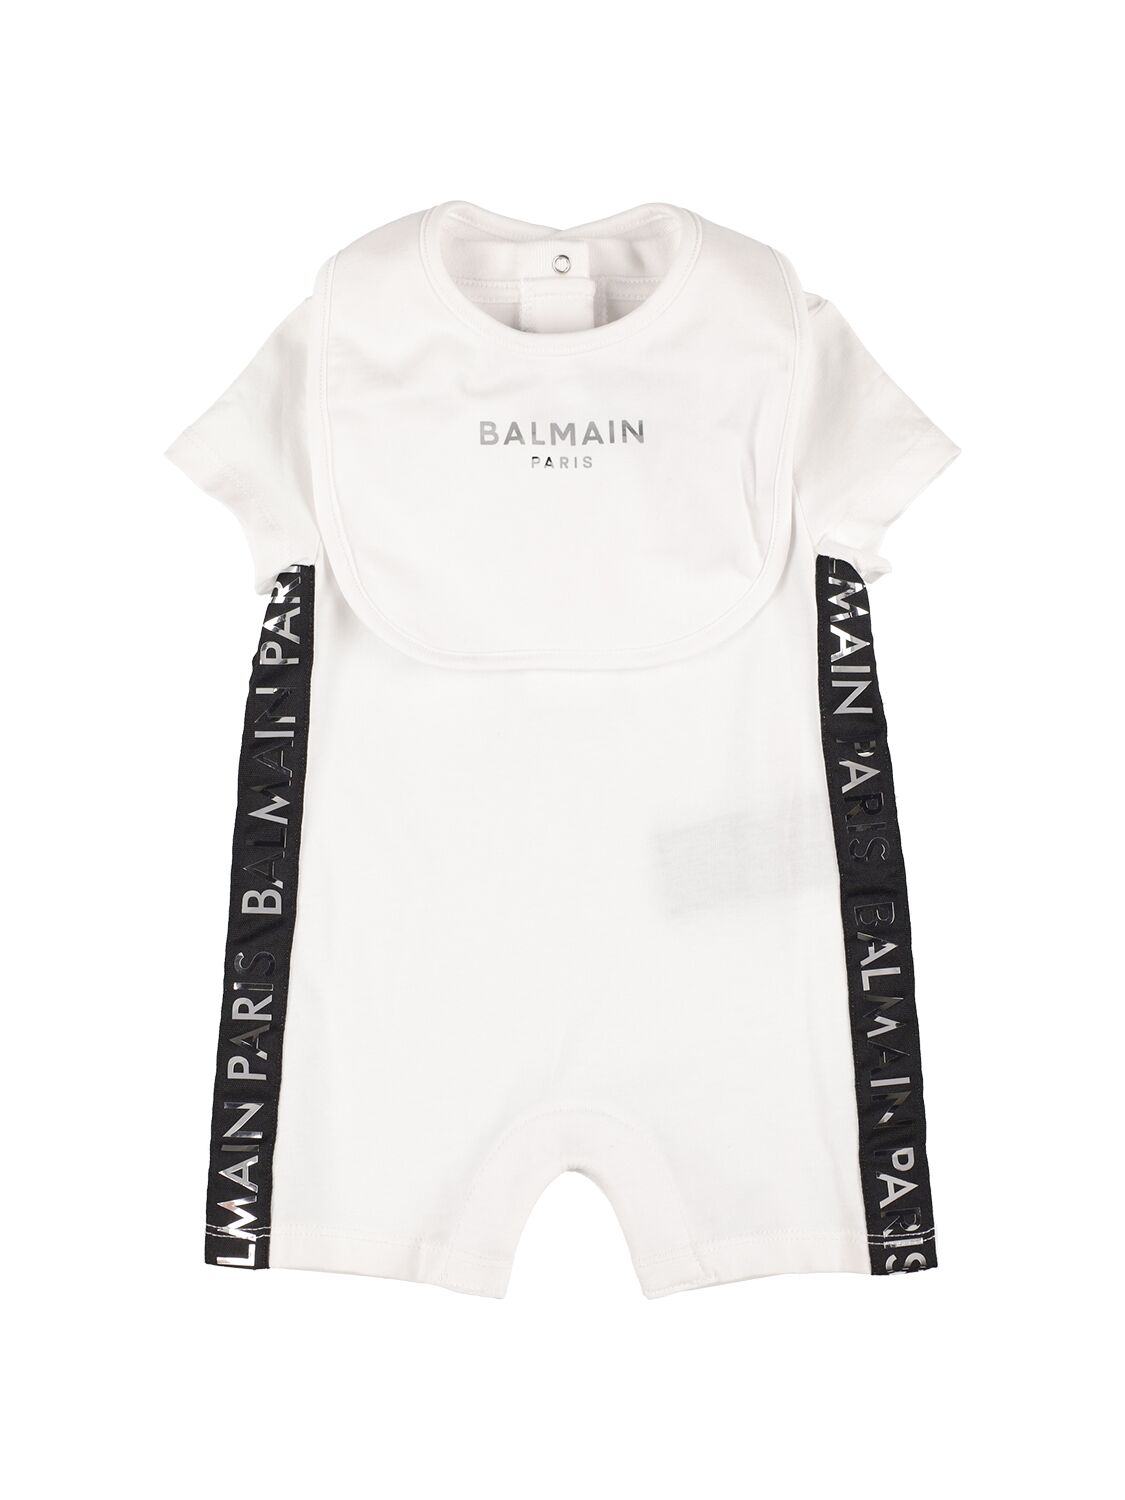 Balmain Babies' Organic Cotton Jersey Romper & Bib In White